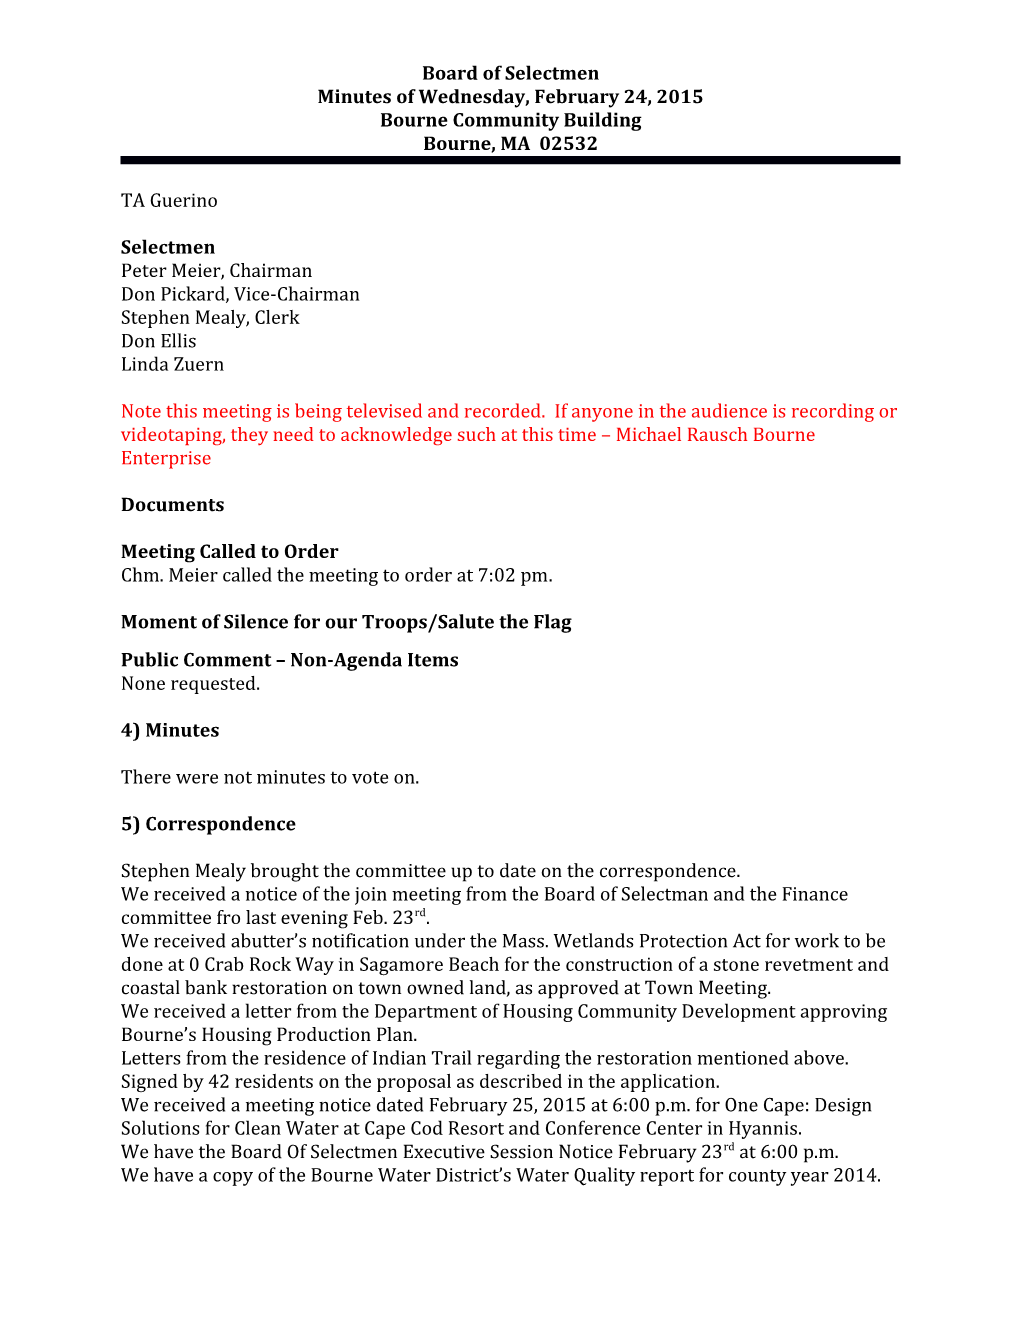 Board of Selectmen S Minutesfebruary 24, 2015